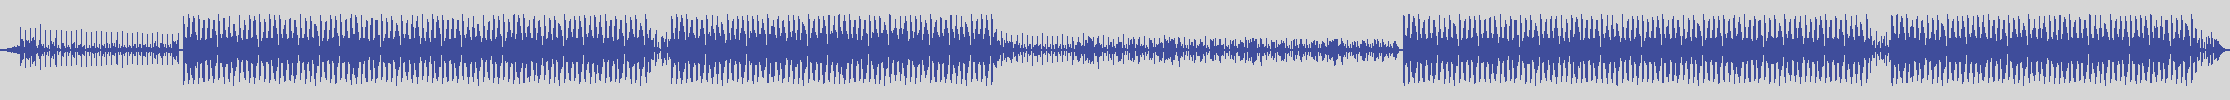 atomic_recordings [AR012] Steve Black - Chiller Floor [Radio Edit] audio wave form